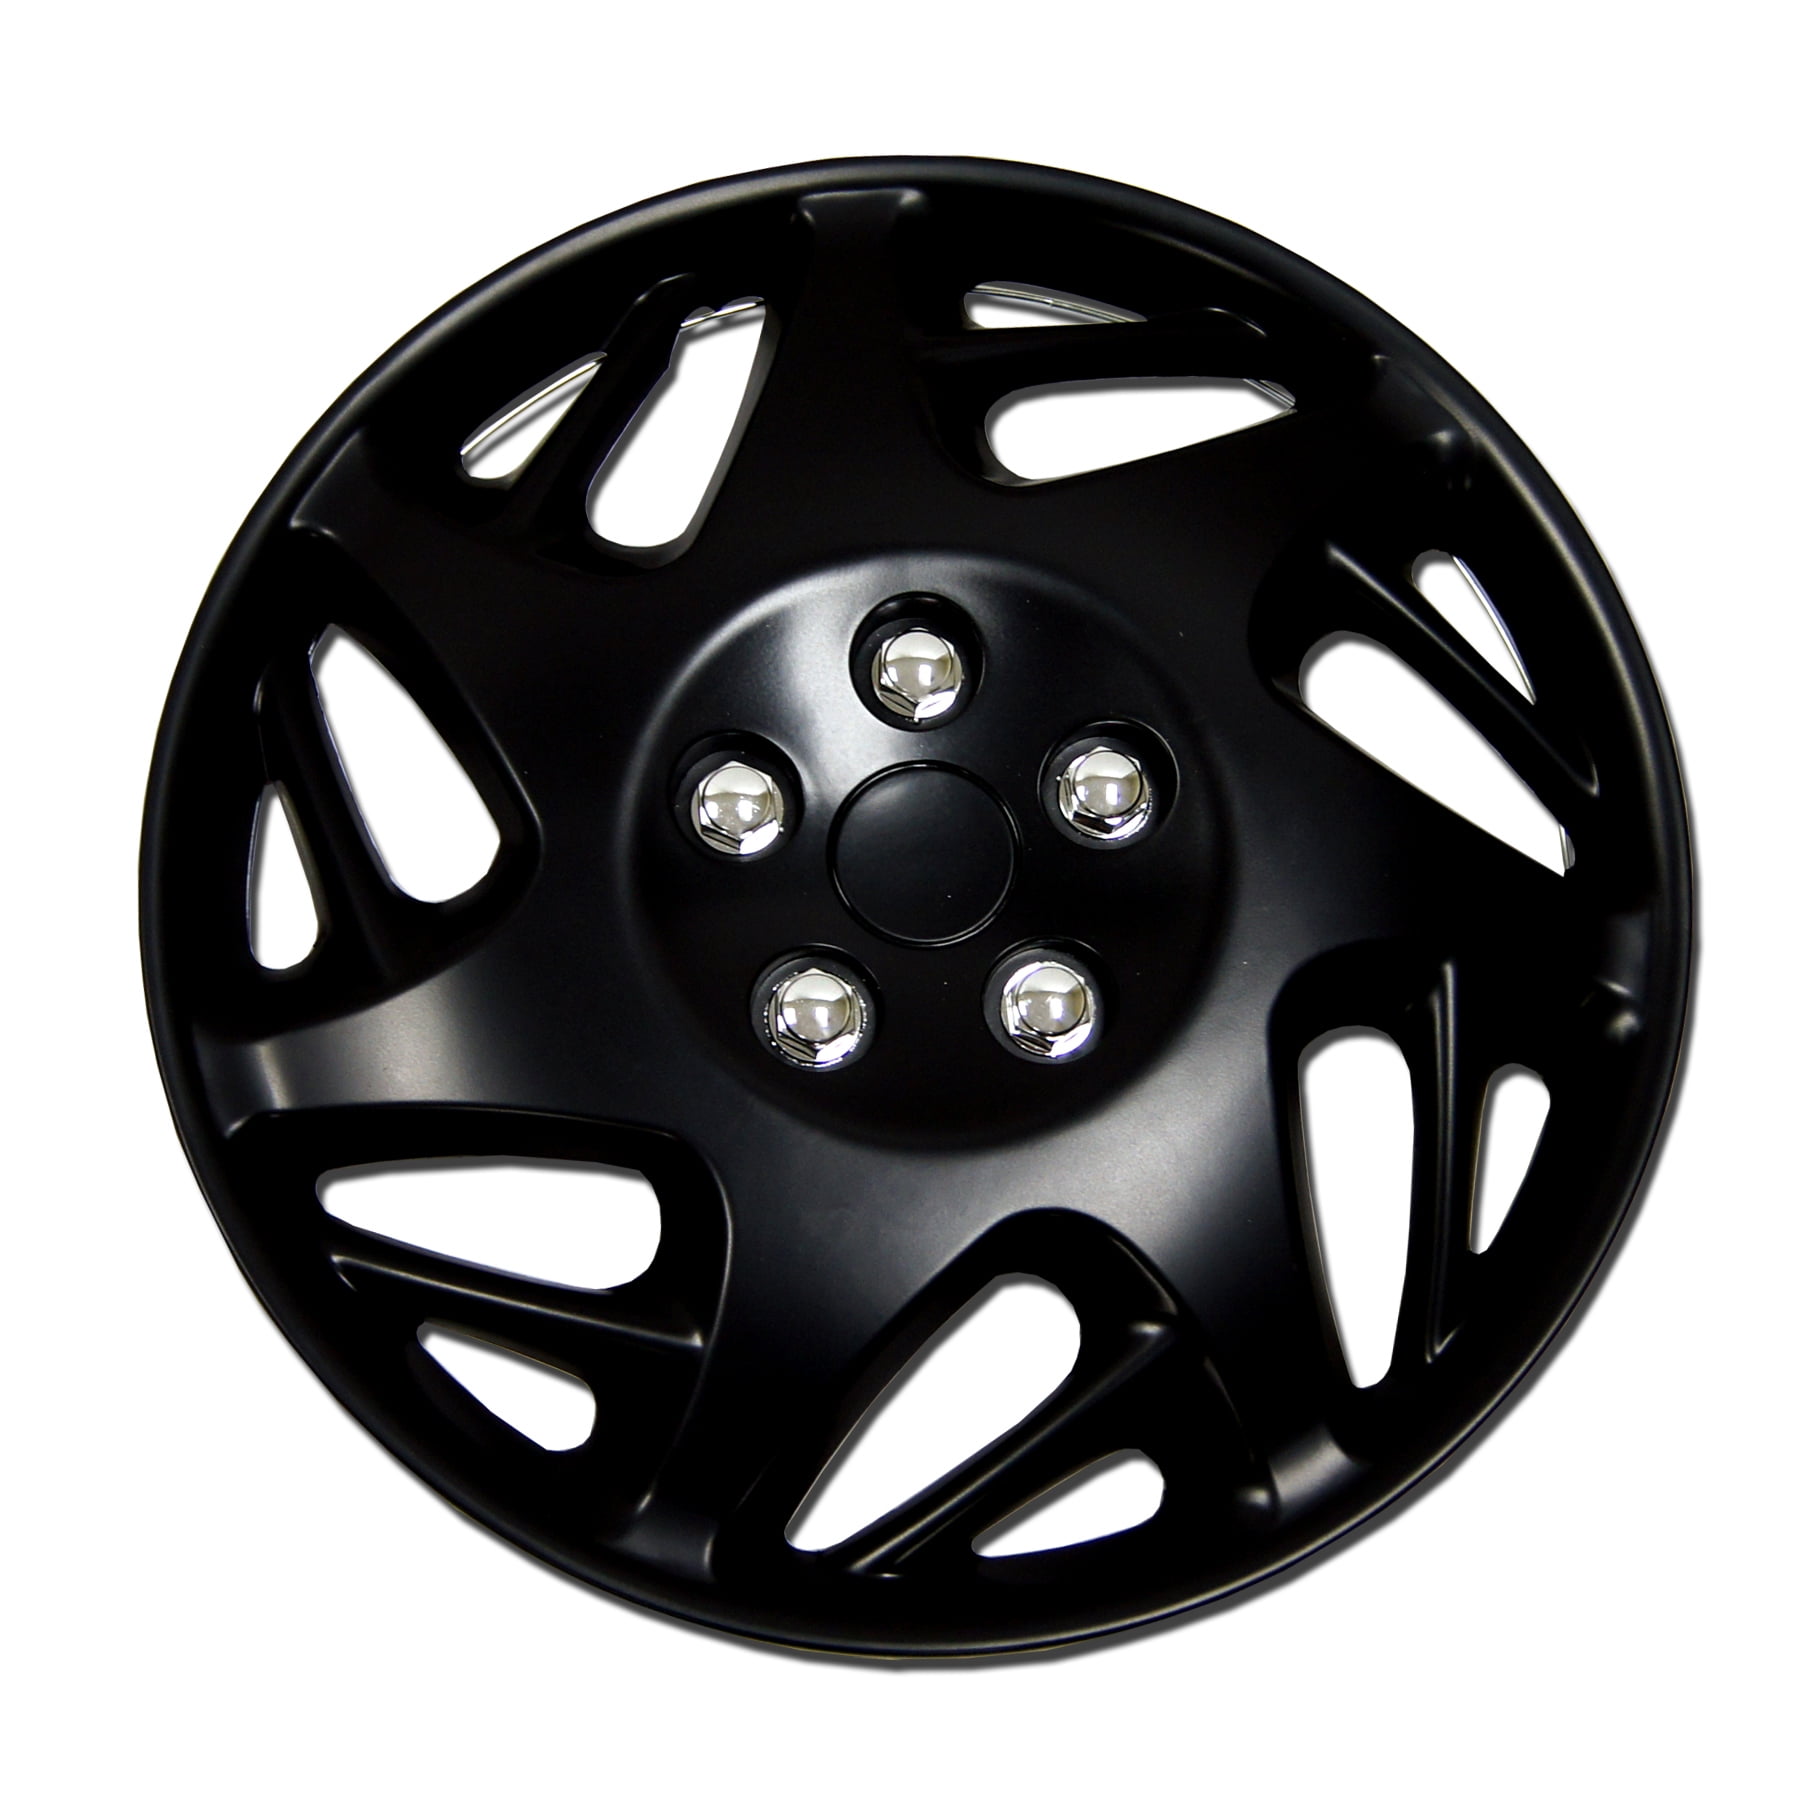 15 inch matte black hubcaps